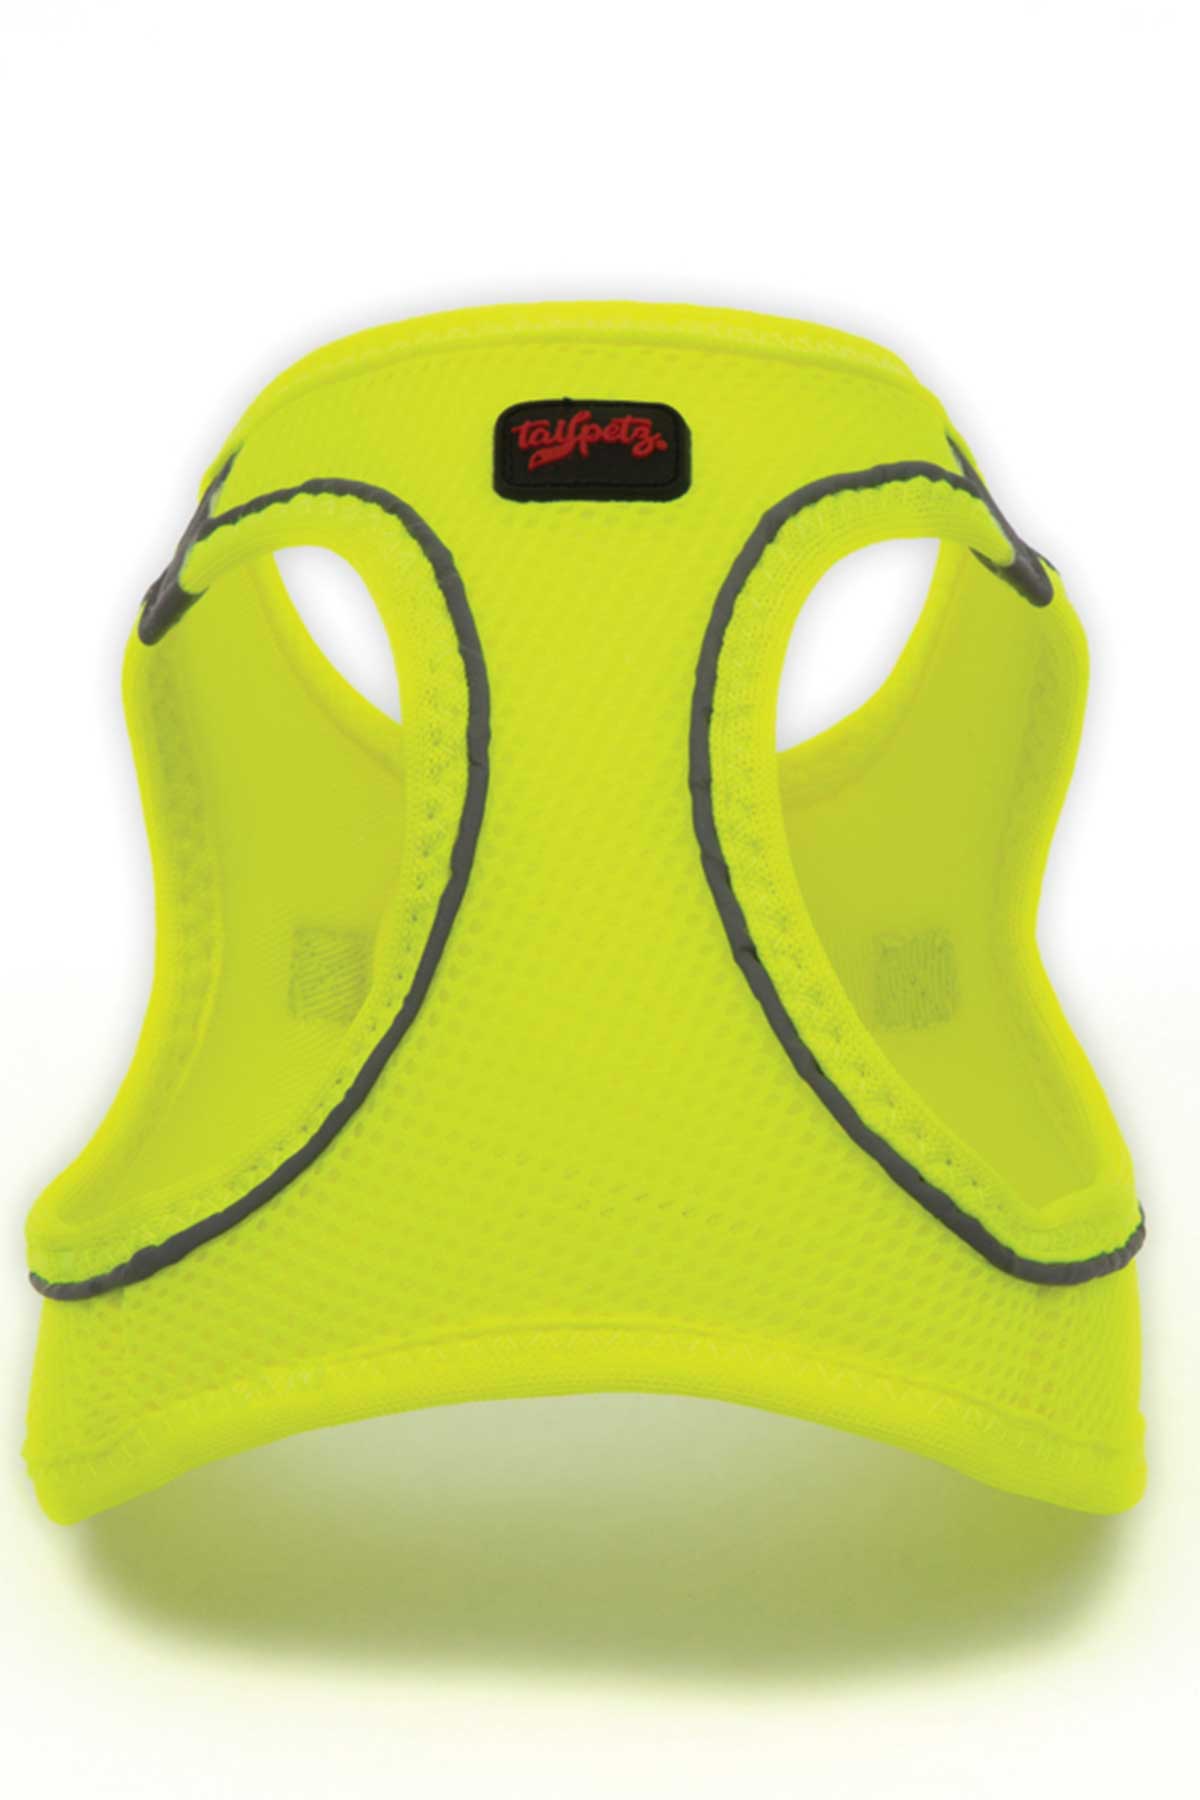 Tailpetz Air Mesh Harness Neon Lime Köpek Göğüs Tasması S